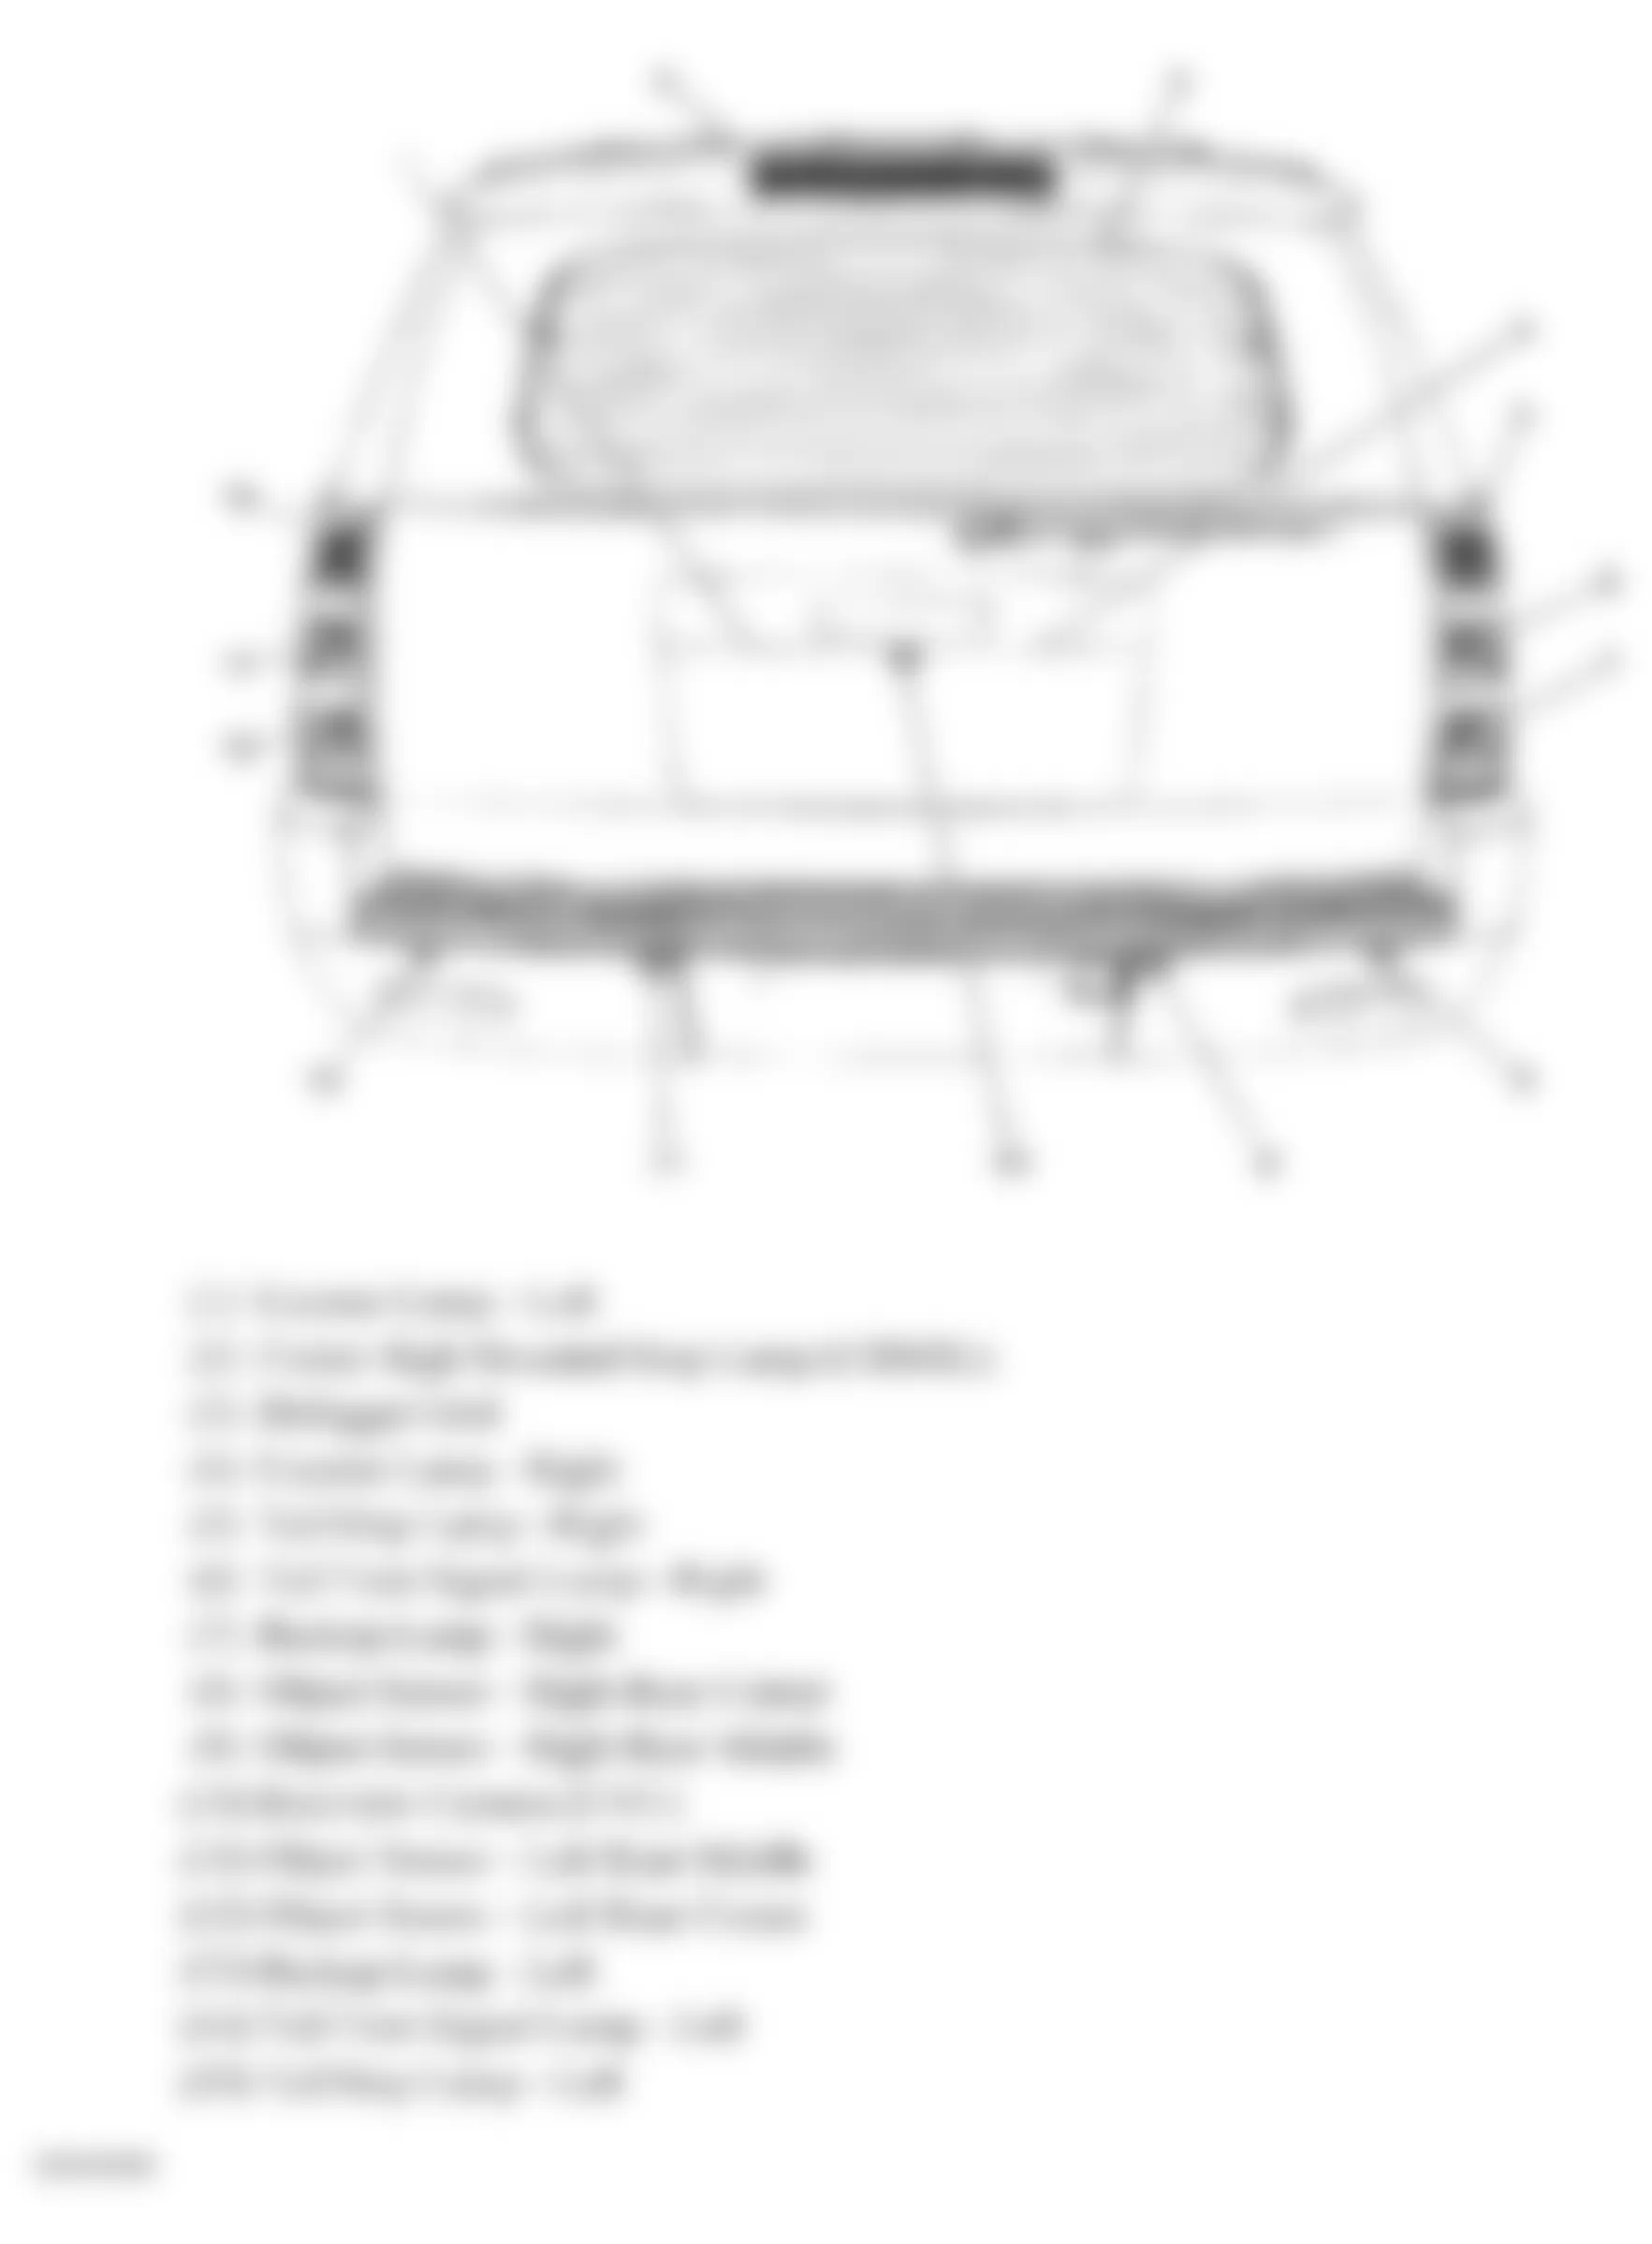 GMC Yukon XL C1500 2008 - Component Locations -  Rear Of Vehicle (Yukon W/One Piece Liftgate)